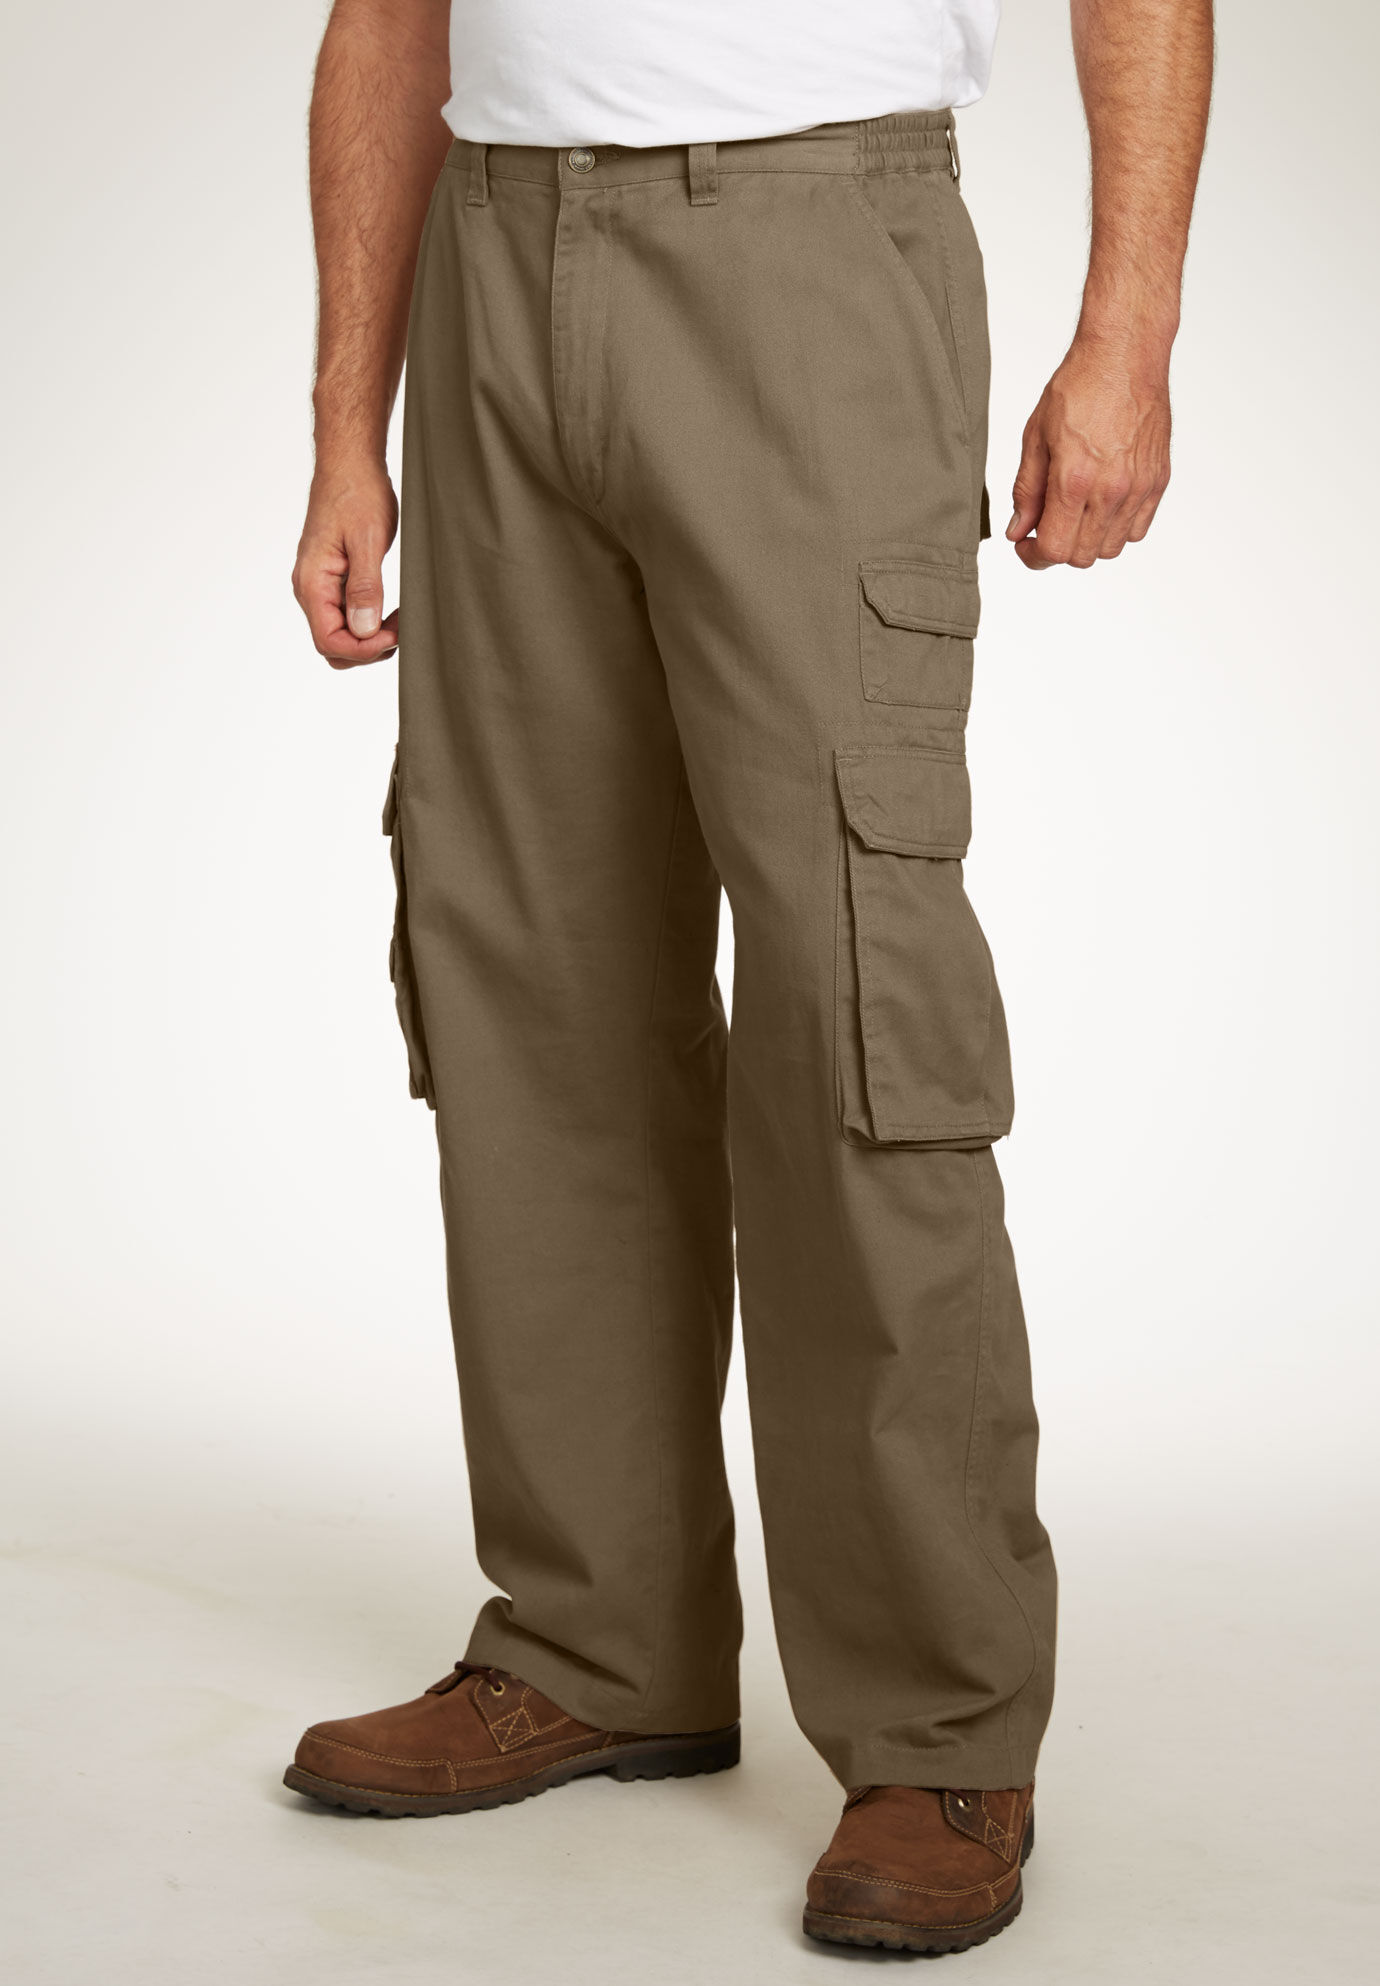 Cargo Pants with Big Pockets black cargo pants outfit grunge Cargo  Pants with Big Pockets  fashion   Pants for women Cargo pants outfit  Black cargo pants